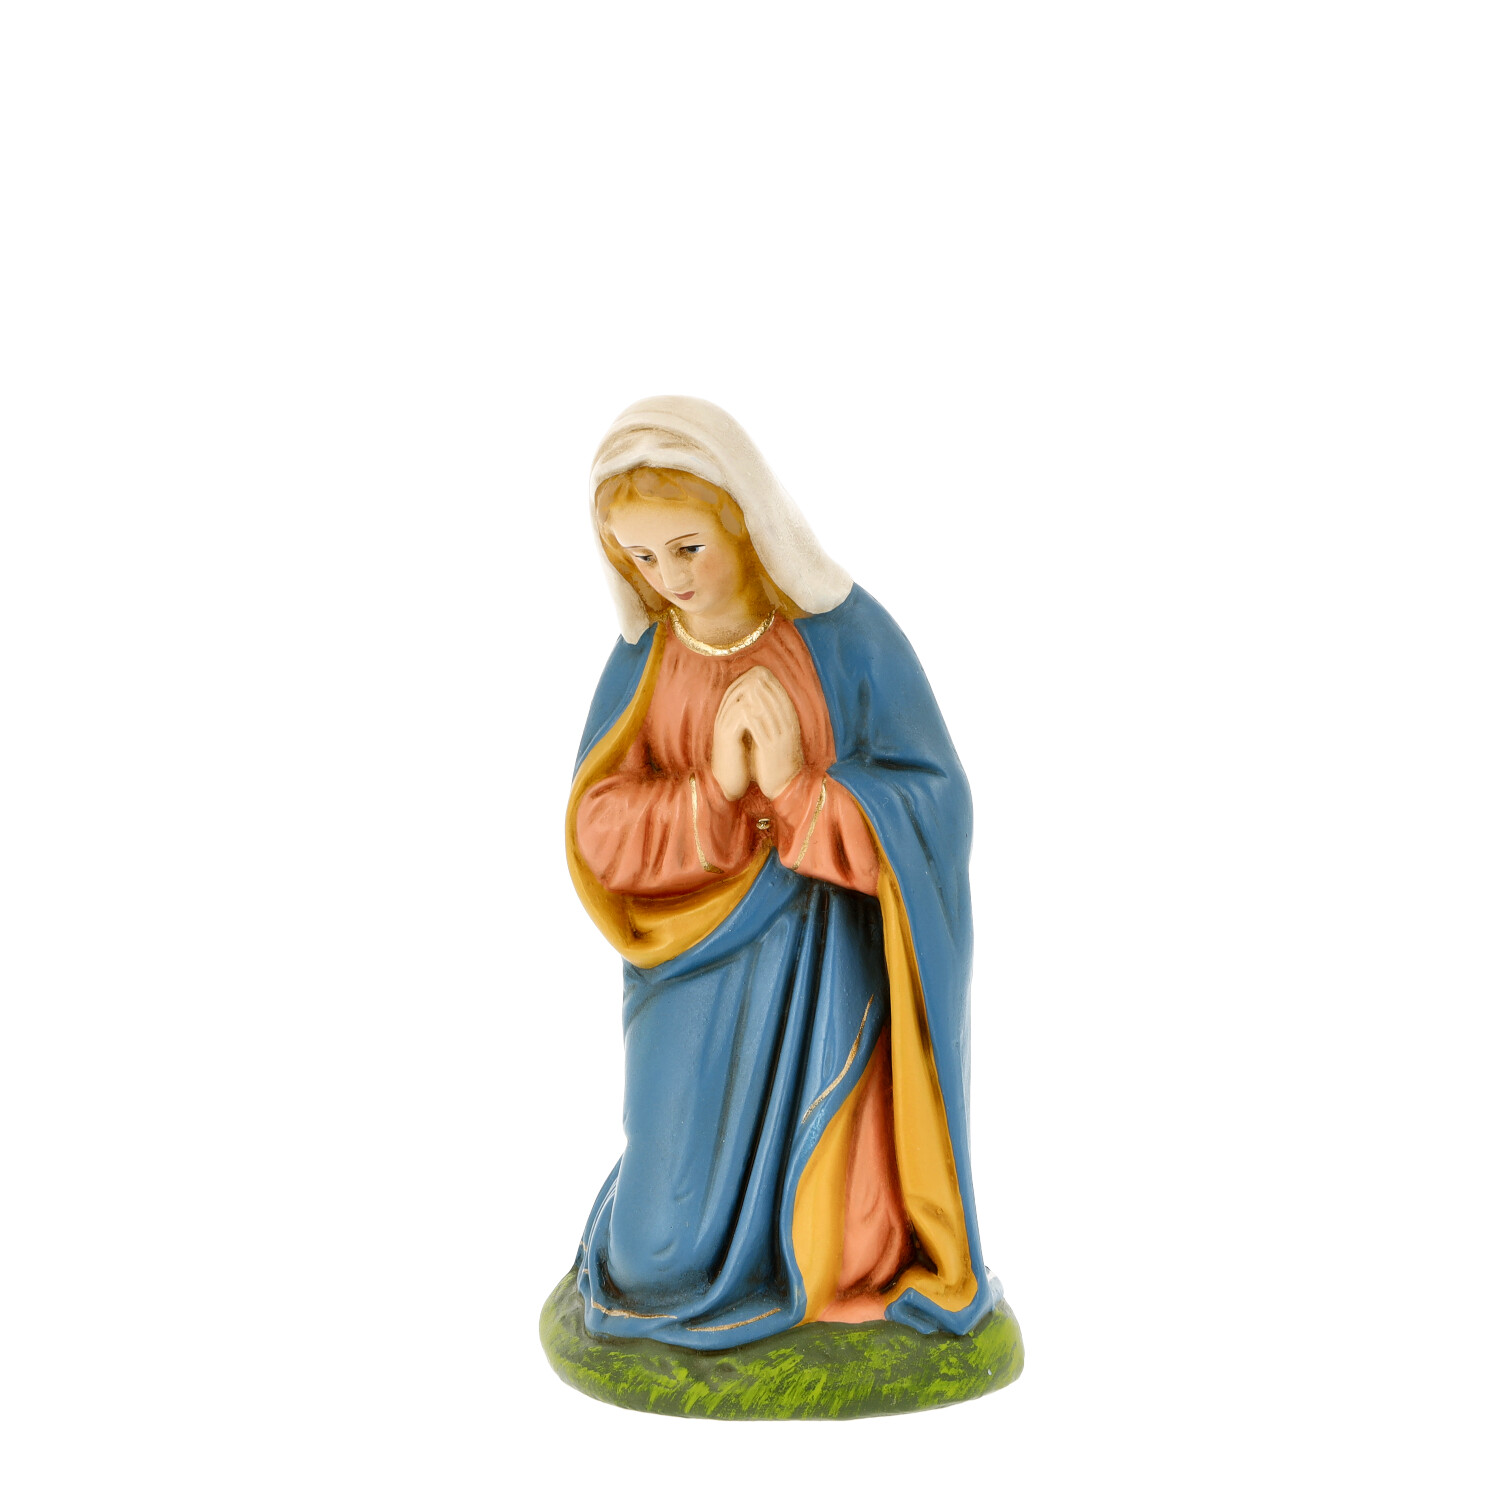 Kneeling Mary - Marolin Nativity figure - made in Germany